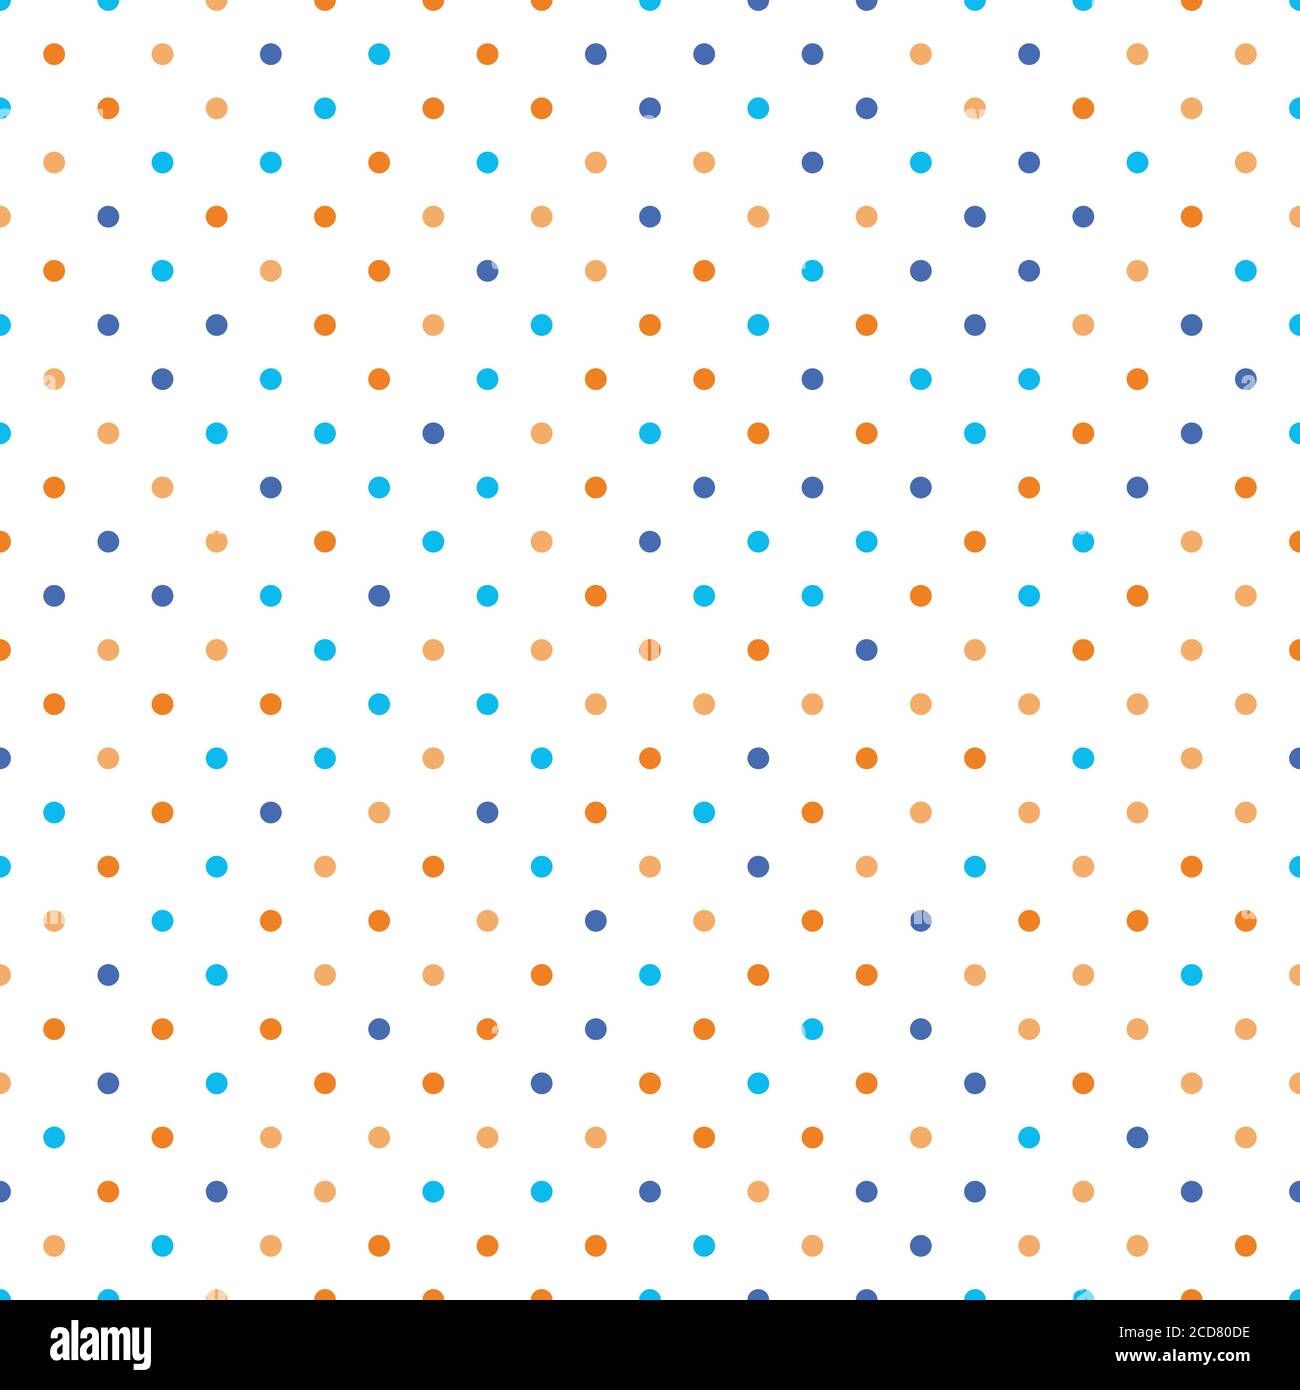 Seamless polka dot pattern. Orange and blue dots in random sizes on white background. Vector illustration. Stock Vector